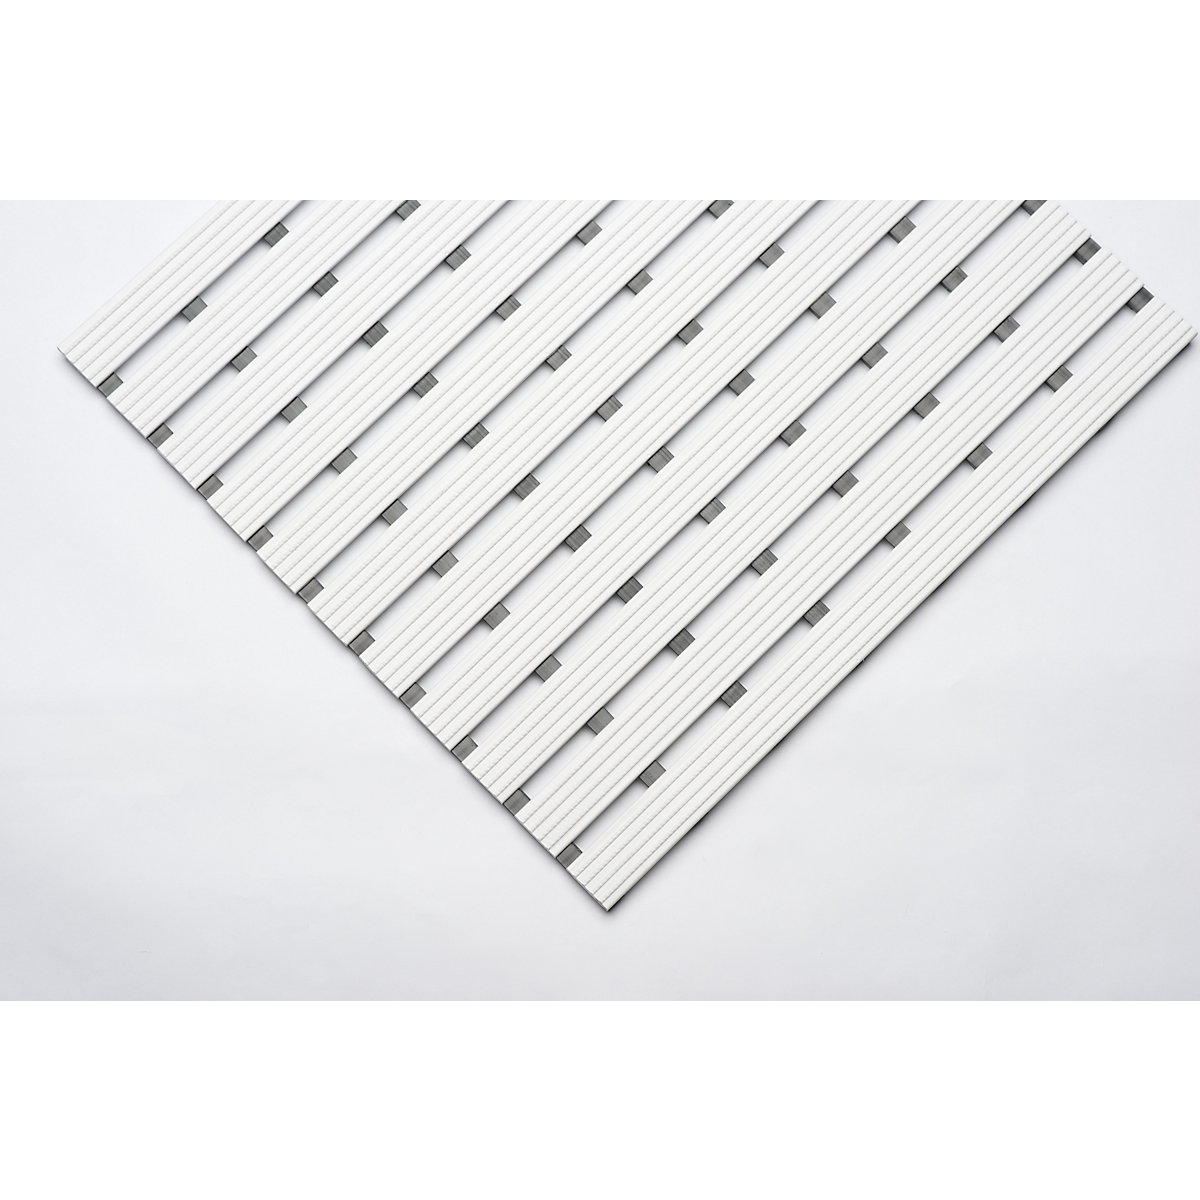 Kunststof mat, per str. mtr., loopvlak van harde kunststof, antislip, breedte 600 mm, wit-6